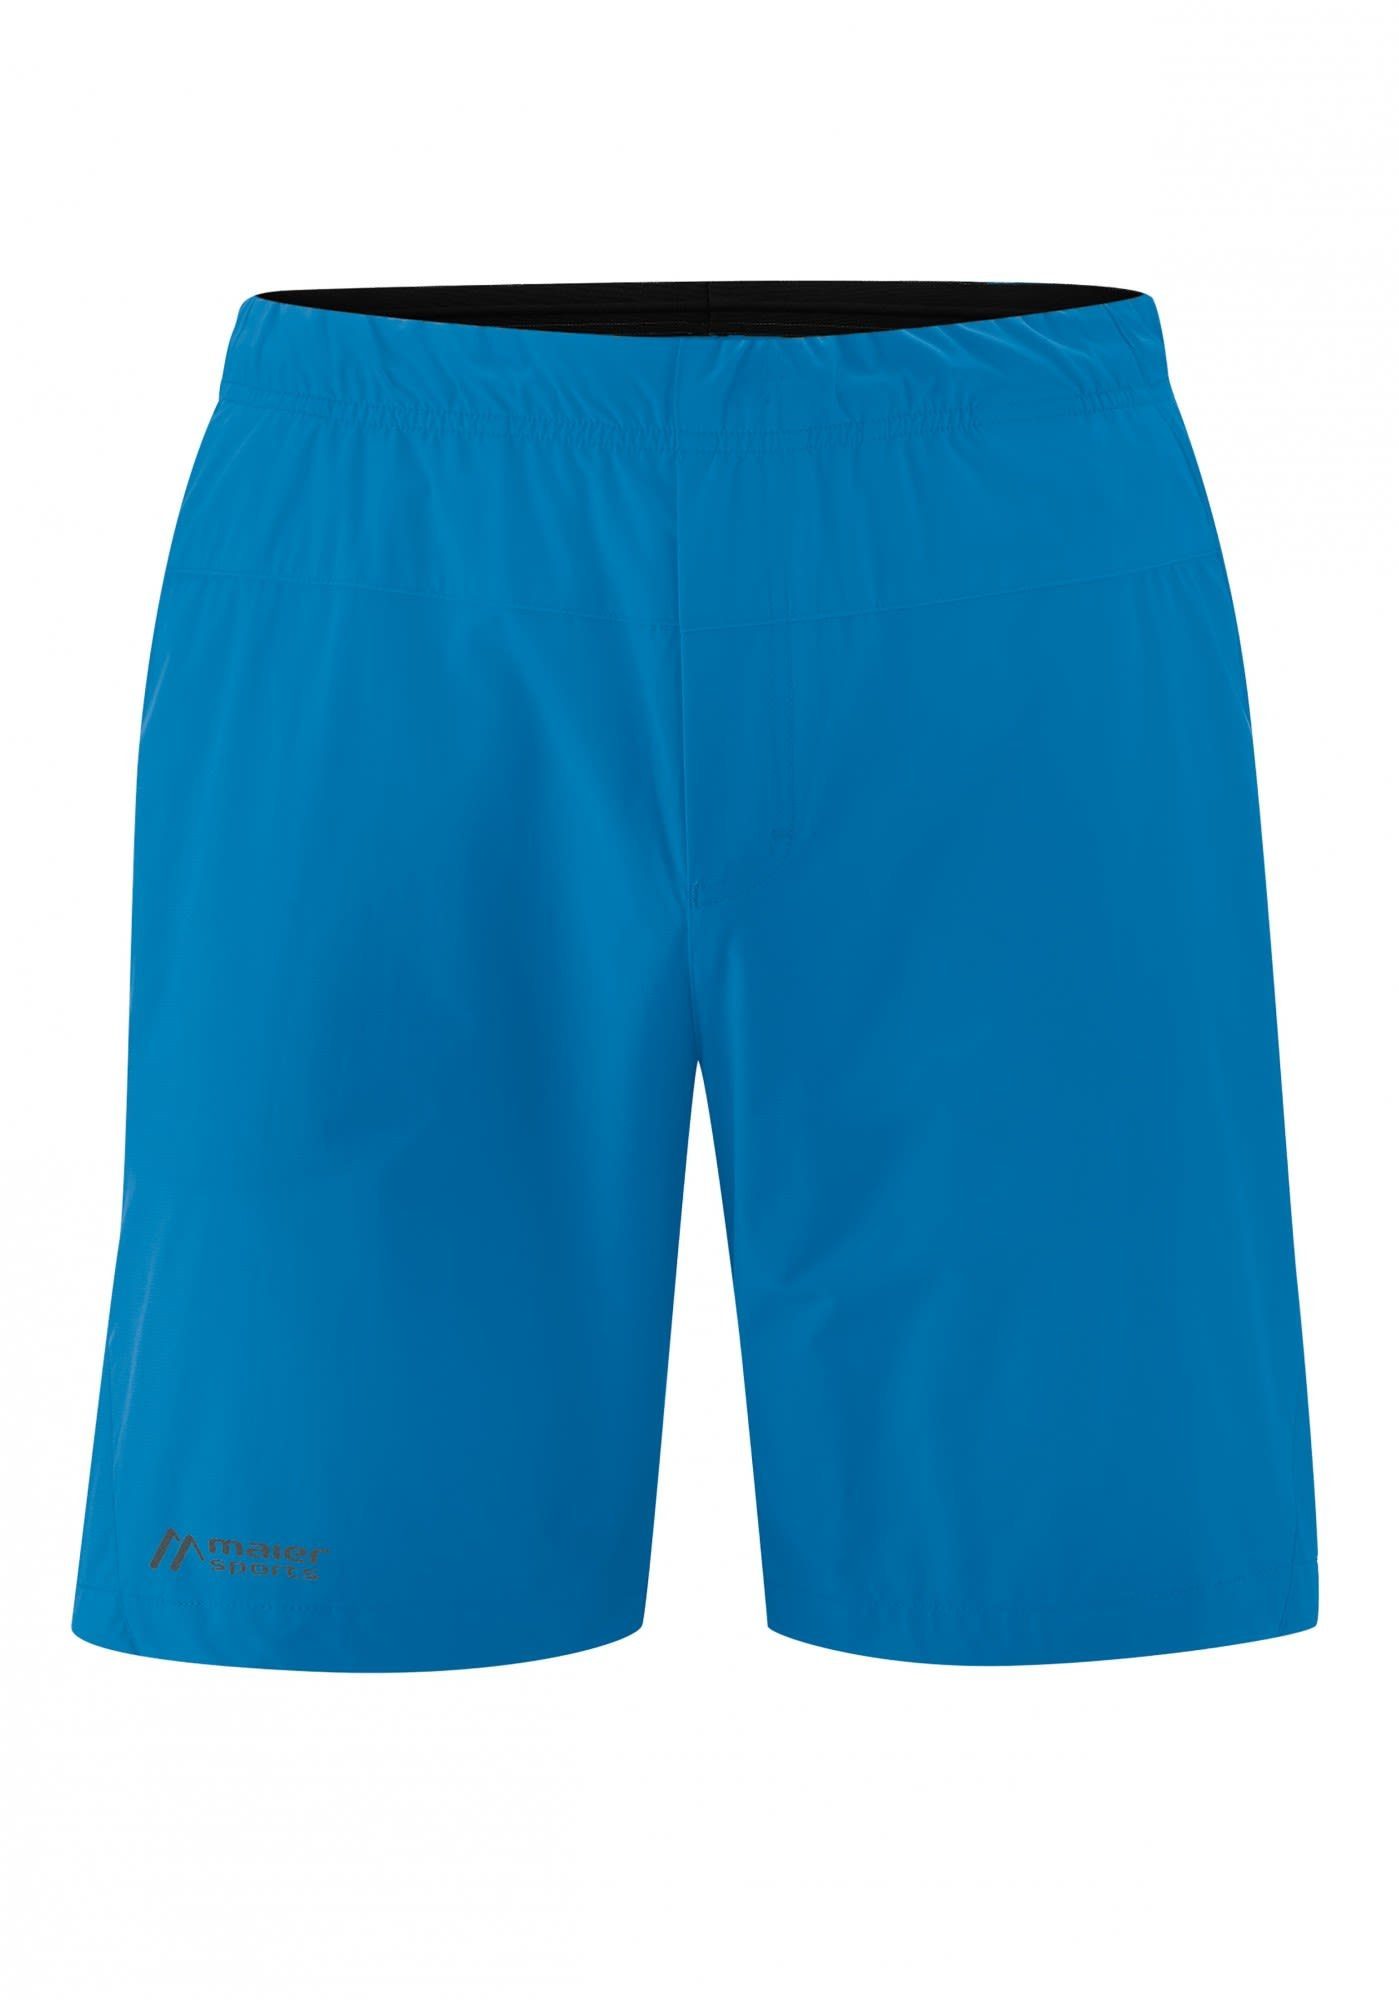 Maier Sports Strandshorts Maier Sports M Fortunit Short Herren Shorts Imperial Blue